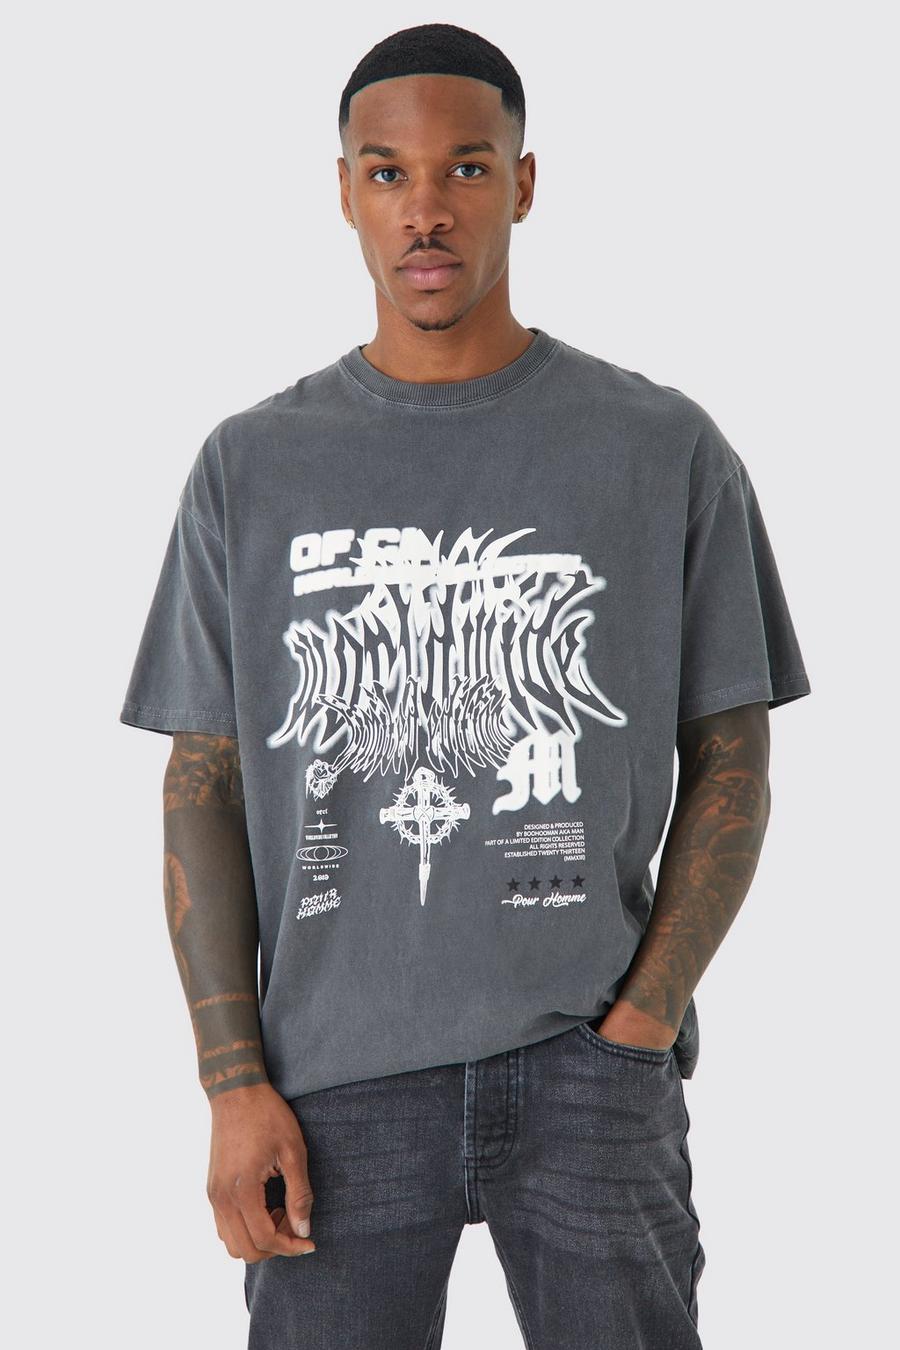 Charcoal grey Oversized Overdyed Gothic Graphic T-shirt